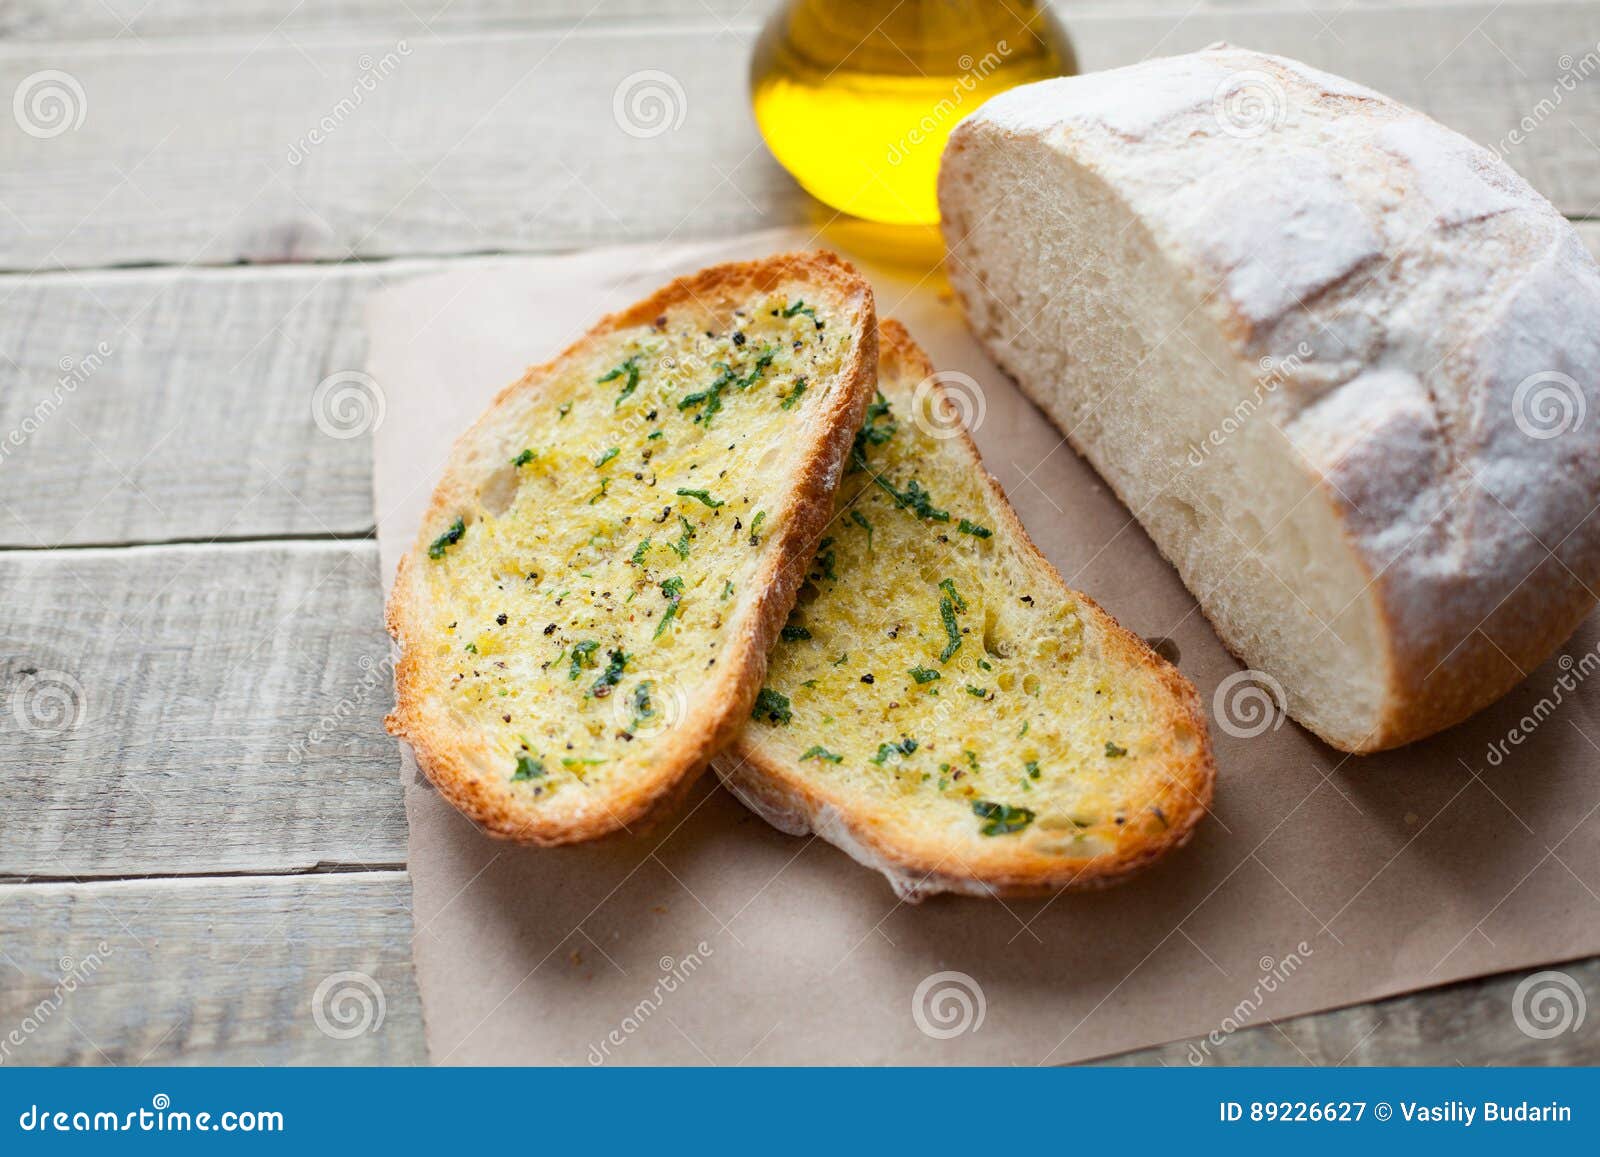 Bread olive oil. Хлеб с оливковым маслом. Чиабатта с чесноком и травами. Хлеб с маслом и чесноком. Итальянский хлеб с маслом.